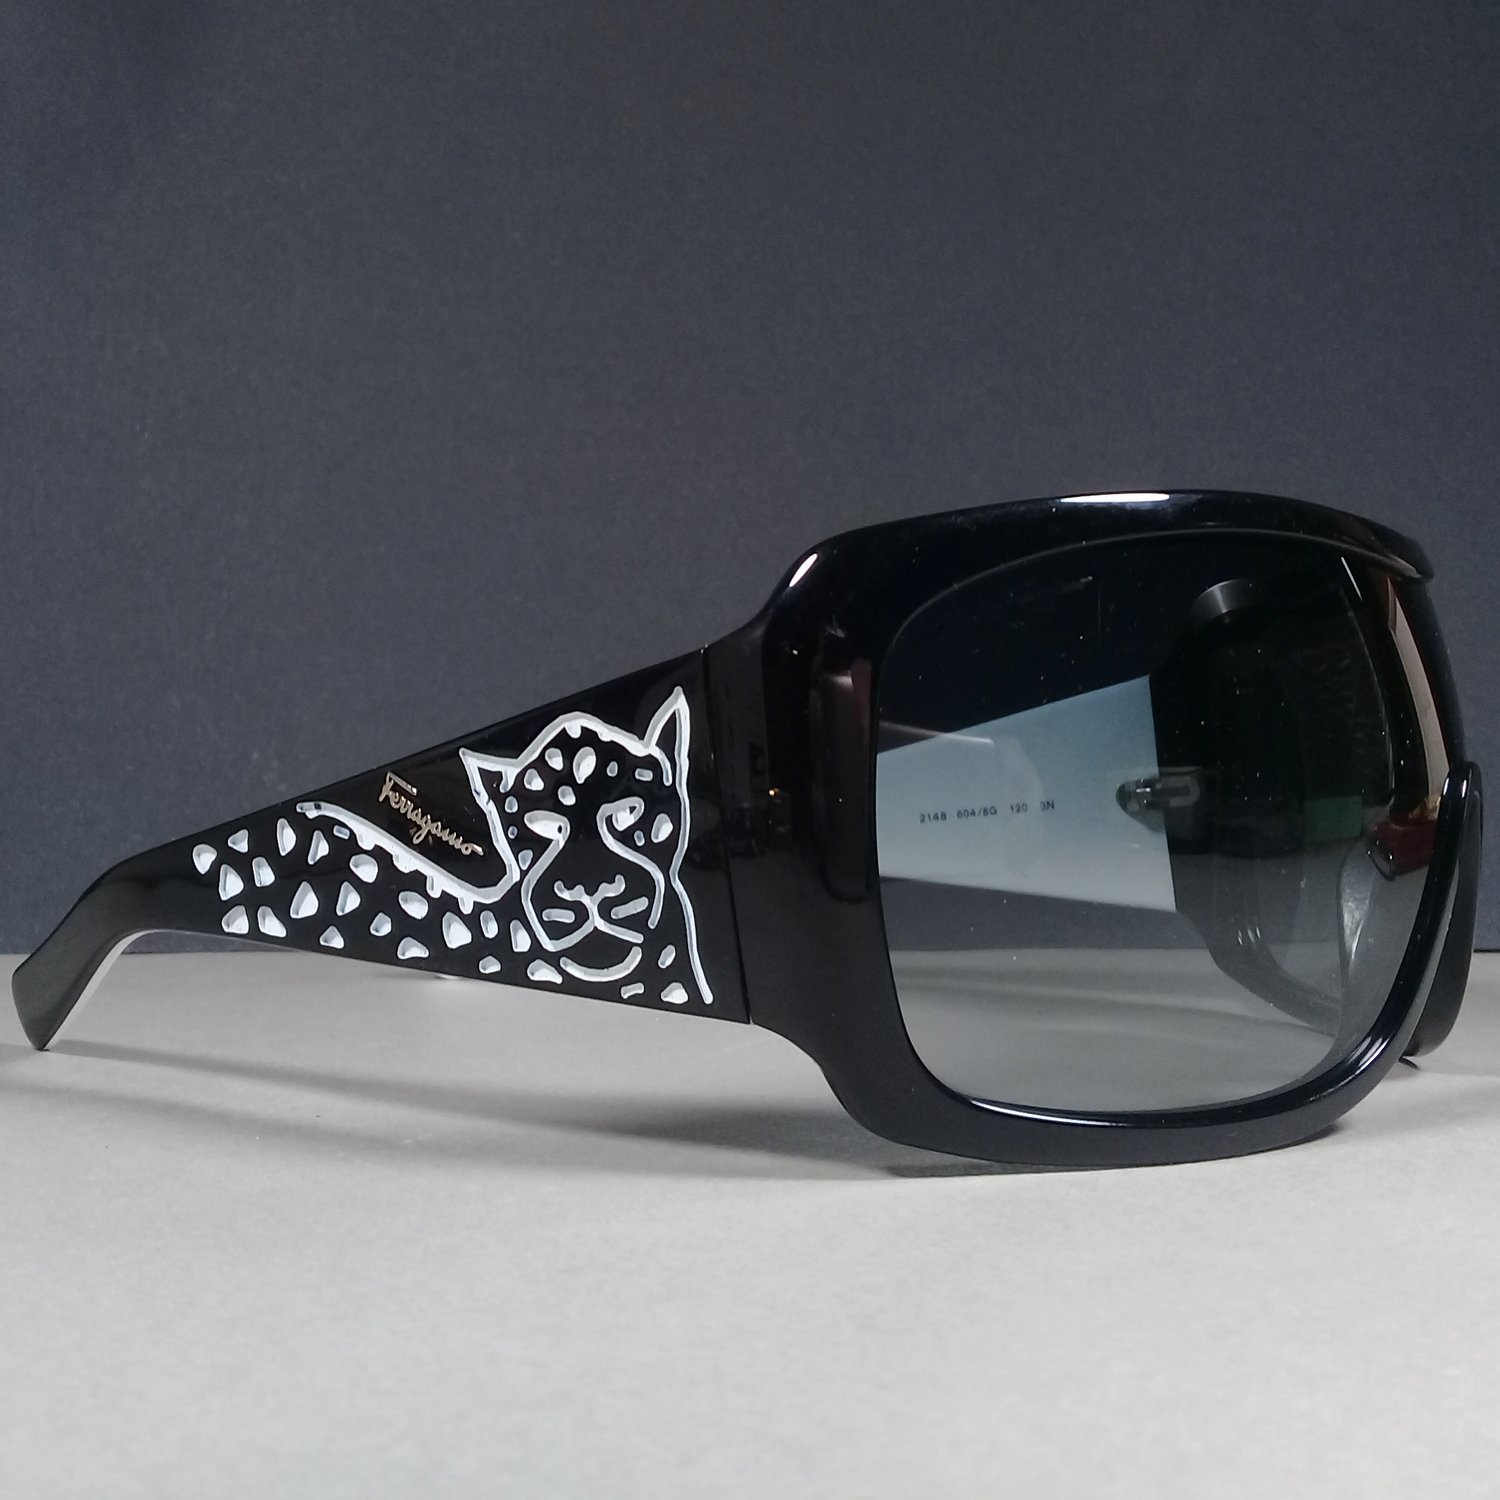 Salvatore Ferragamo 2148 604/8G 120 3N Black & White Wrap Sunglasses